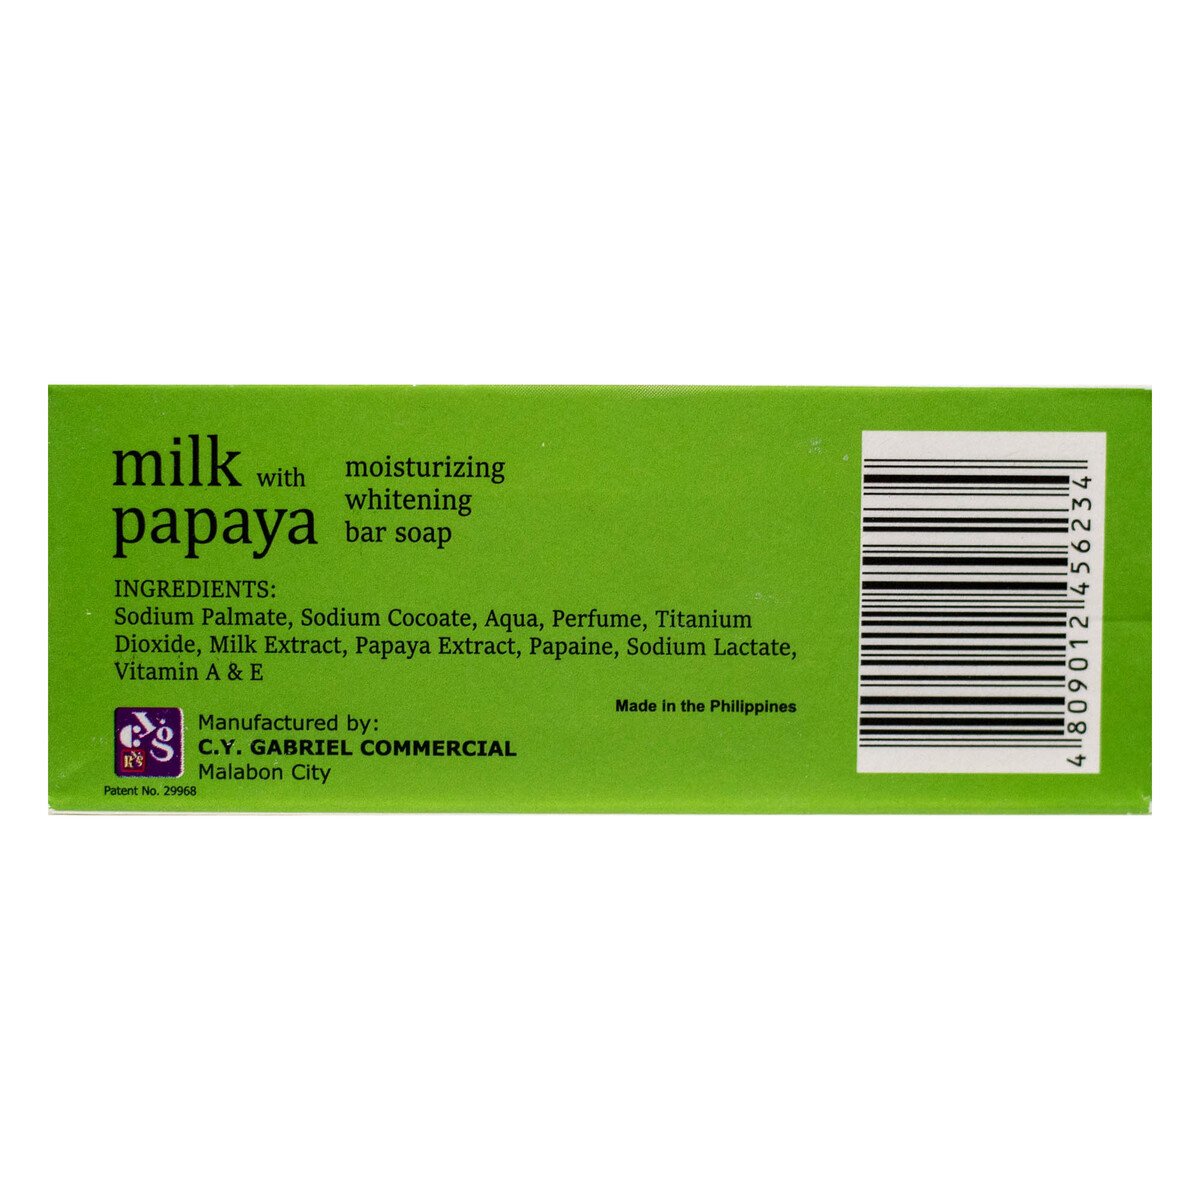 CY Gabriel Milk with Papaya Moisturizing Whitening Bar Soap 135 g